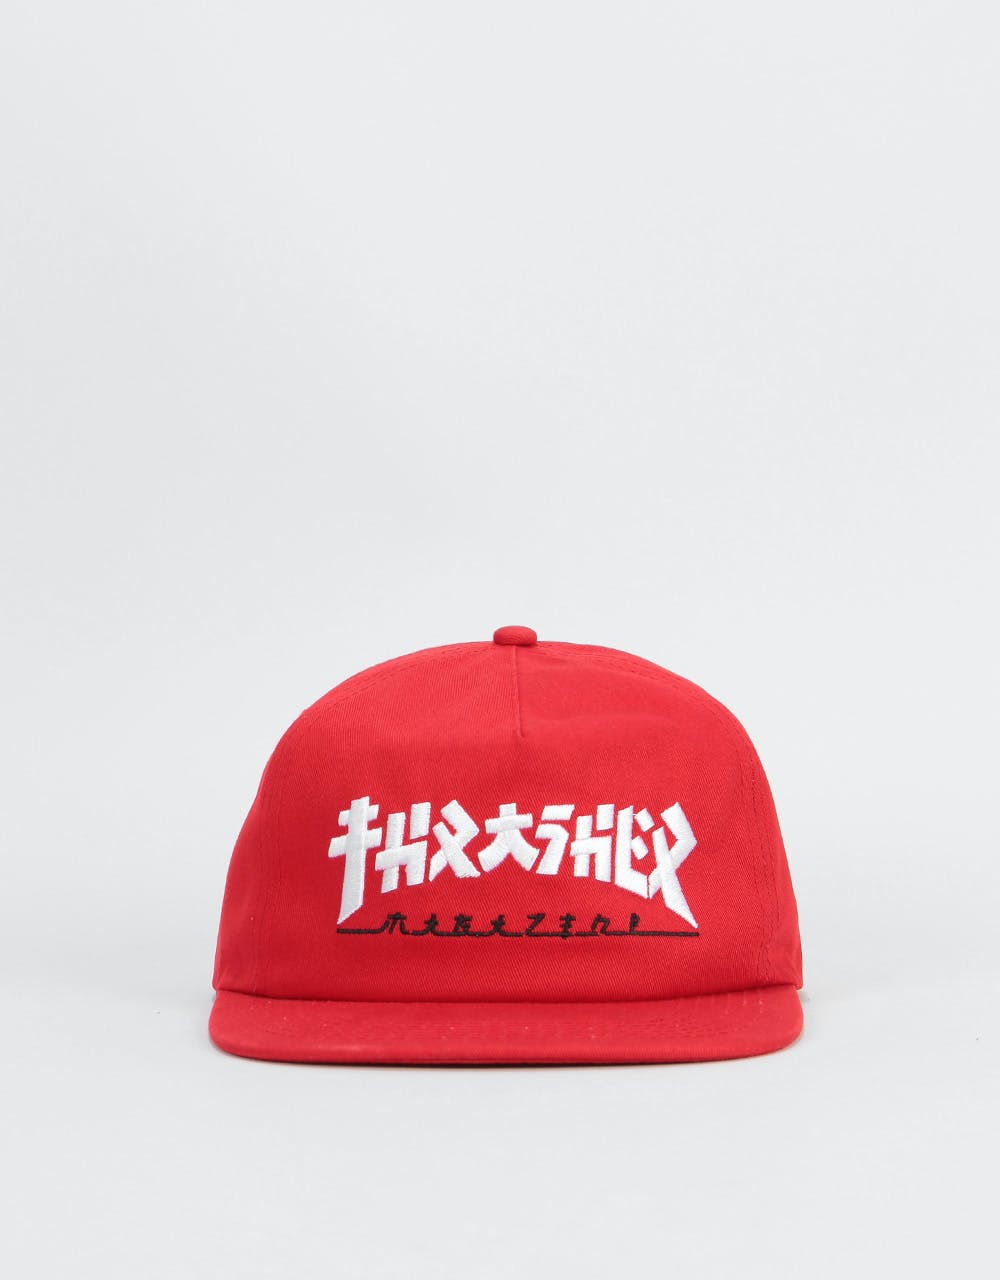 Thrasher Godzilla Snapback Cap - Red